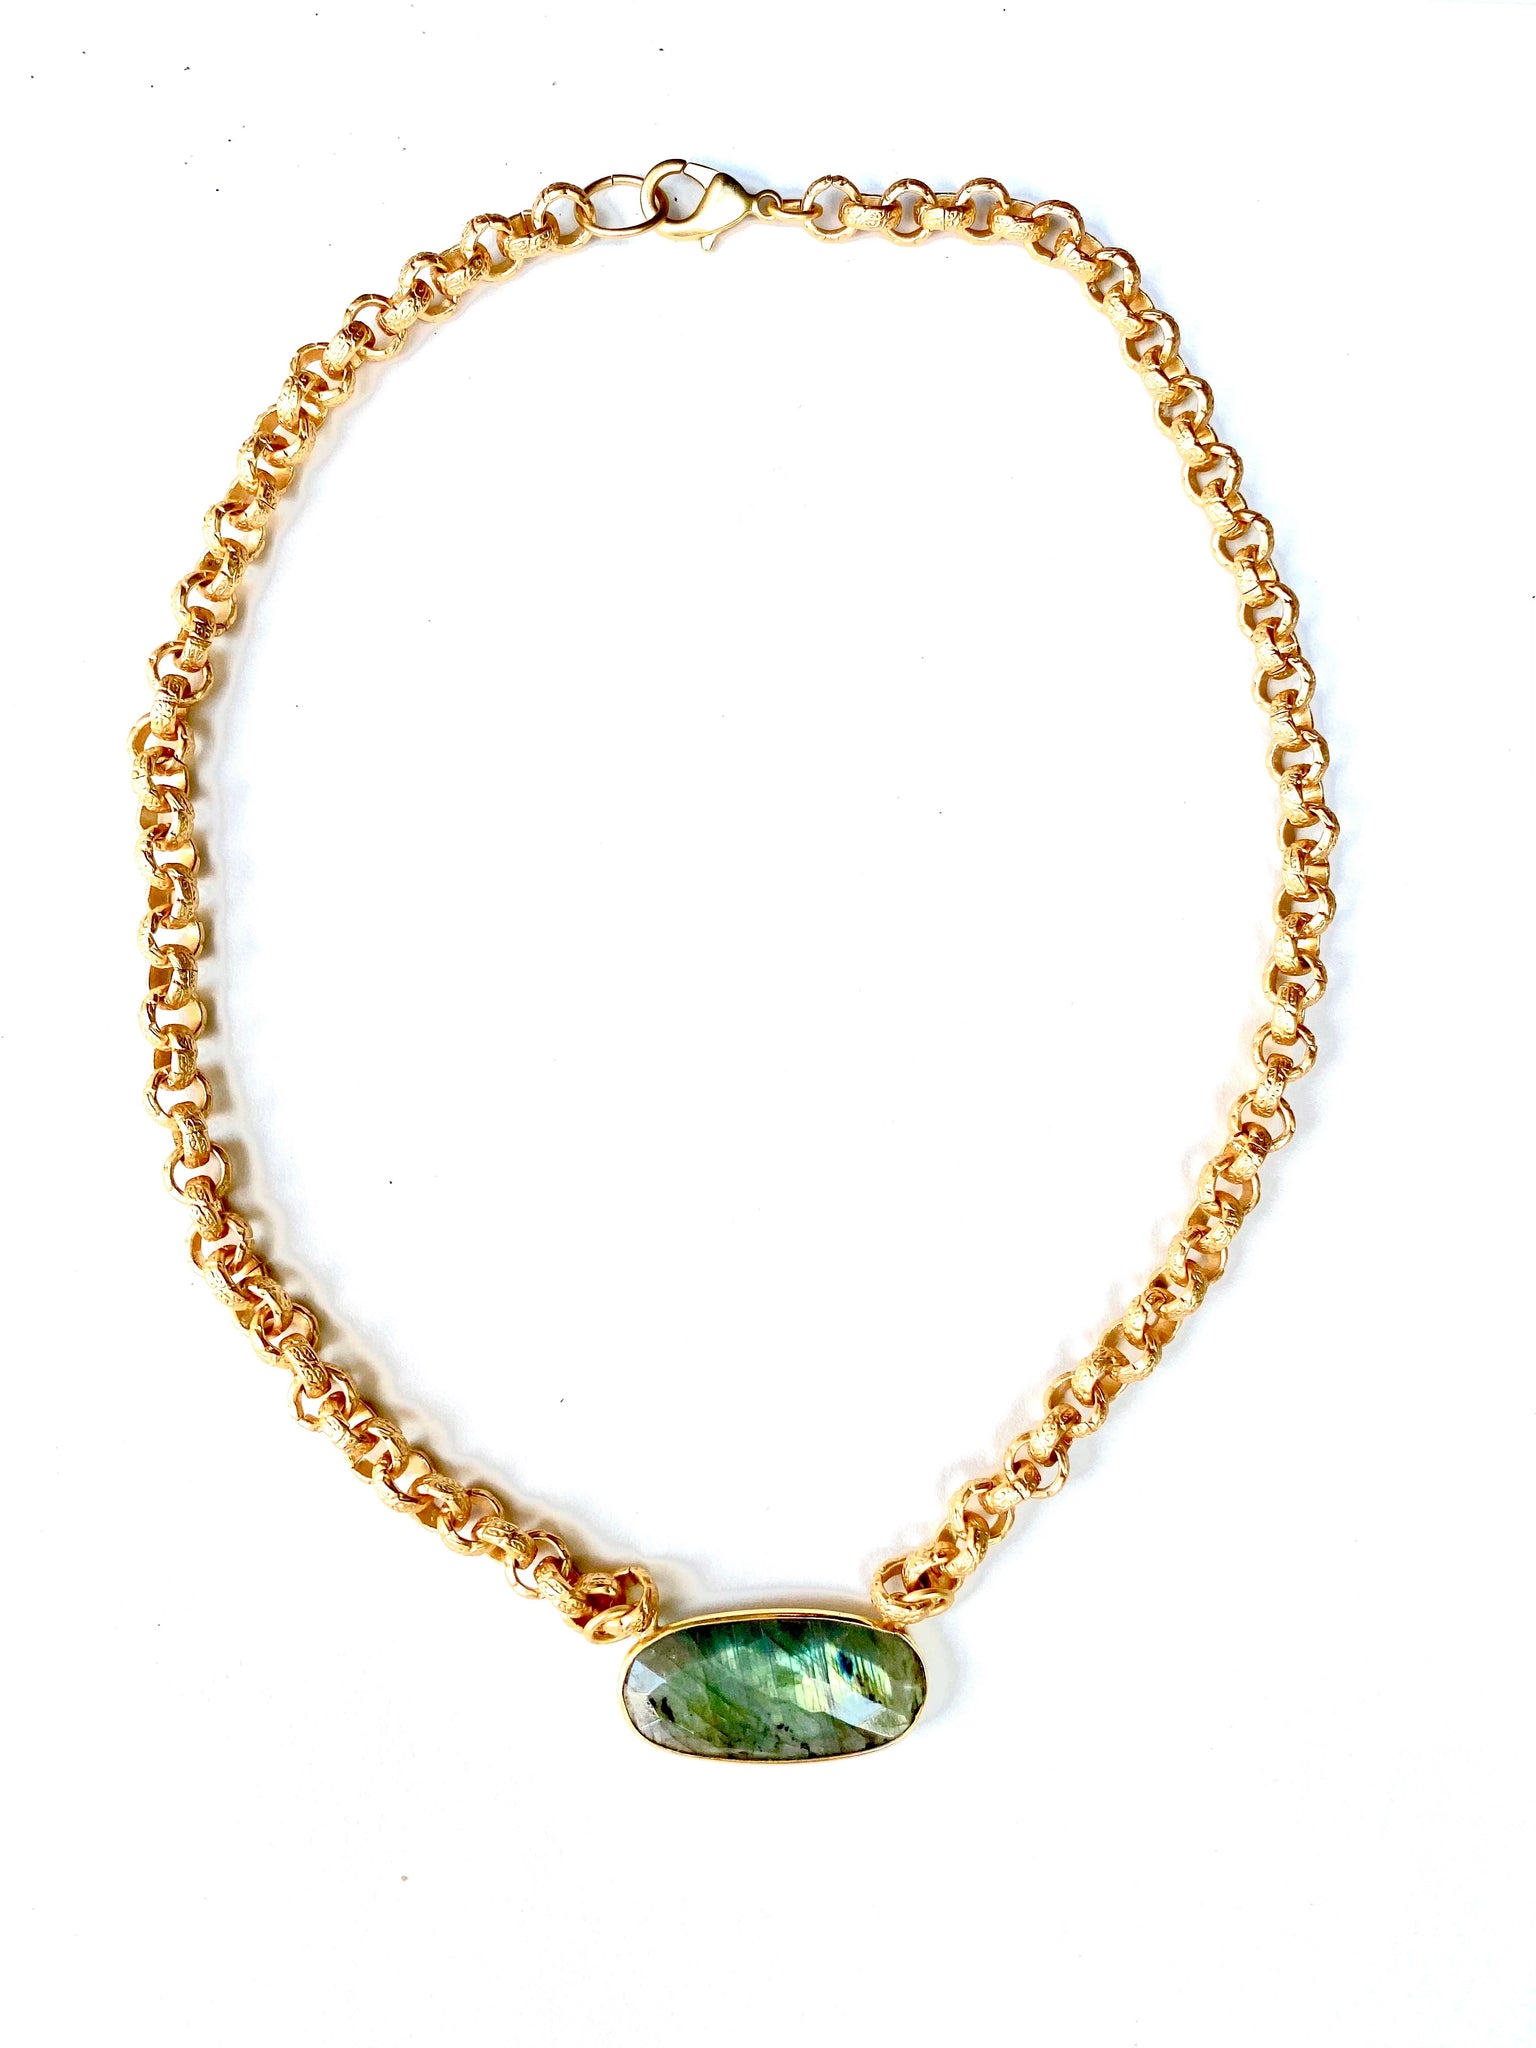 Blaise - necklace with bezel set sterling silver centerpiece stone